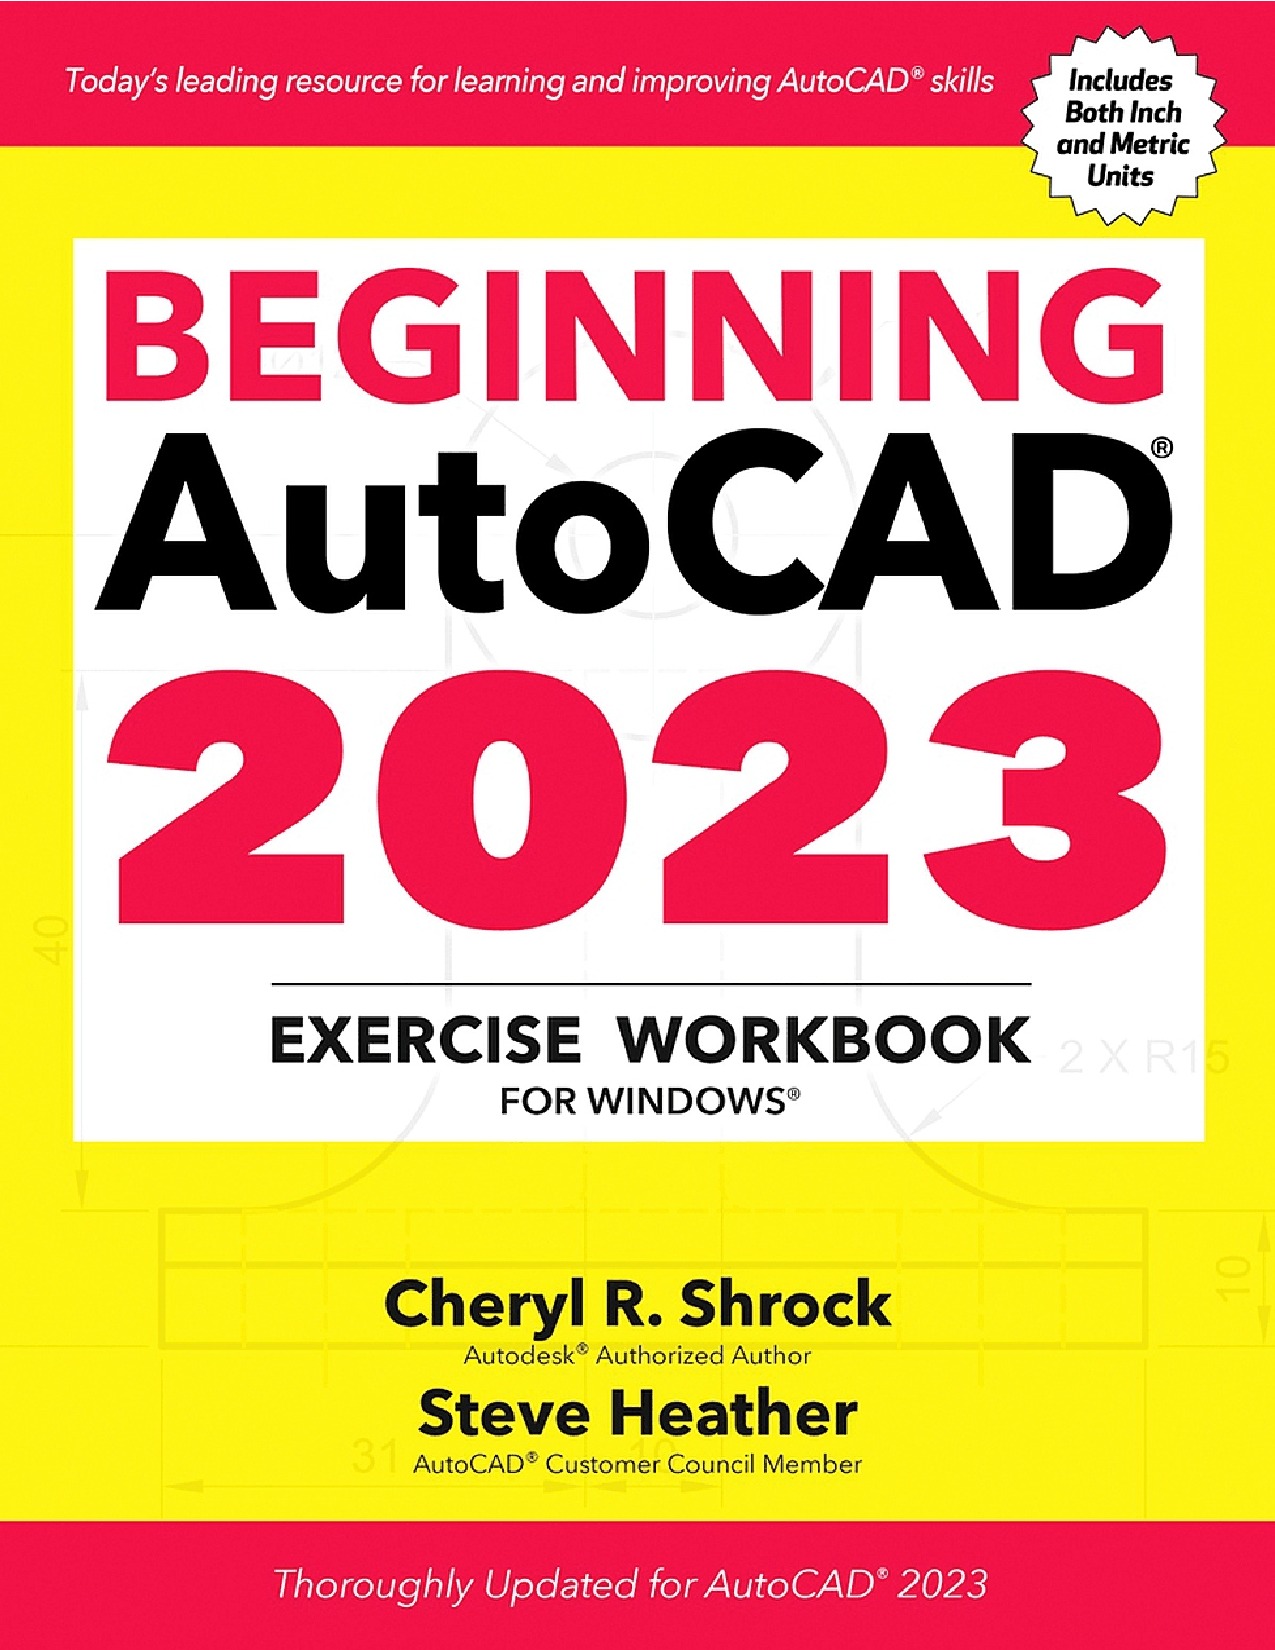 Beginning AutoCAD® 2023 Exercise Workbook For Windows®